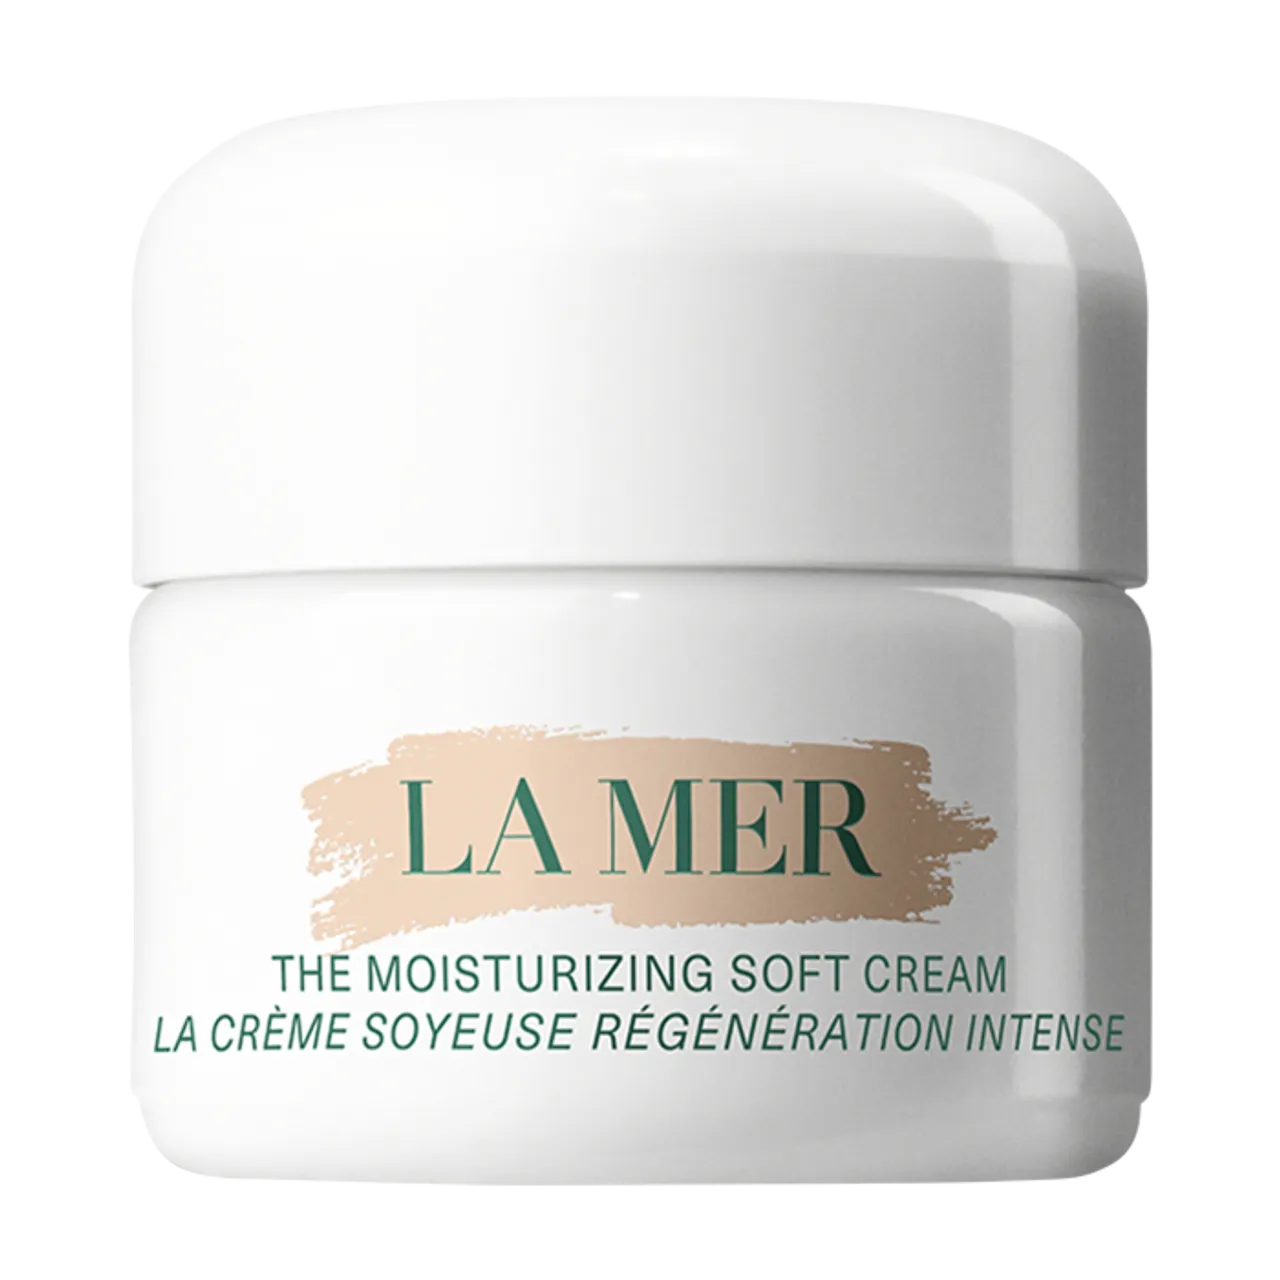 La Mer The Moisturizing Soft Cream 15 ml